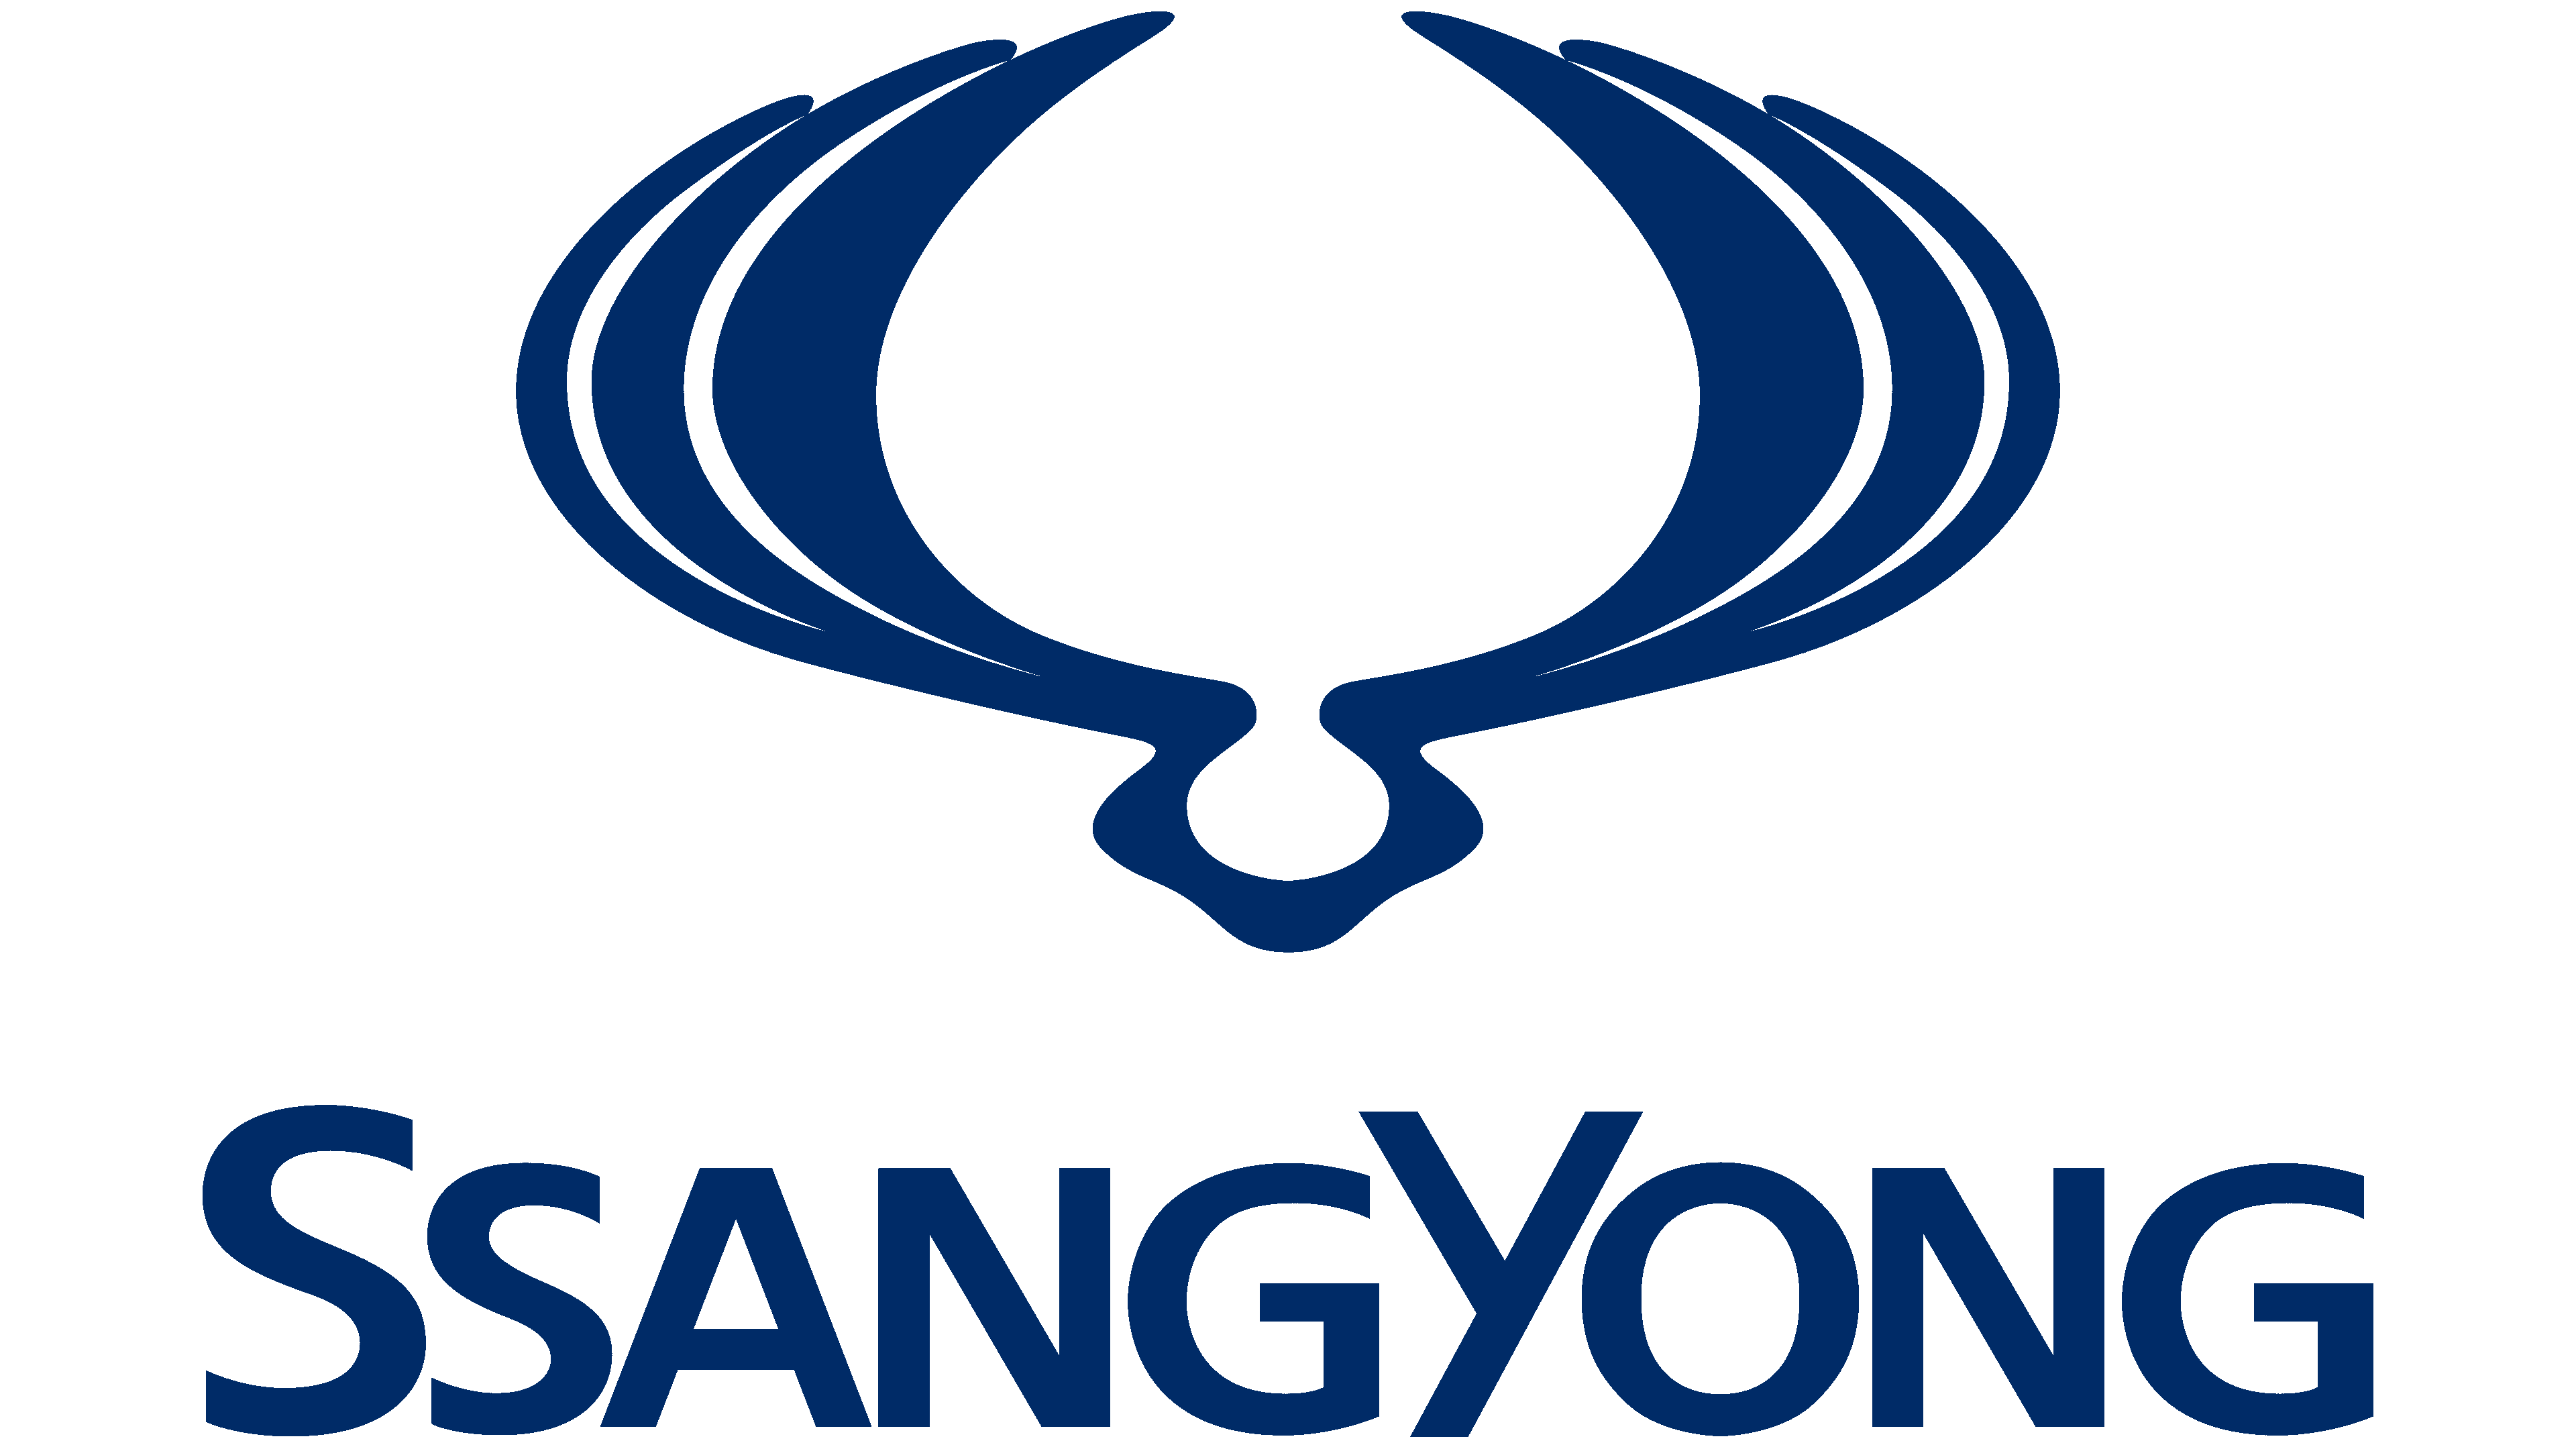 Ssangyong Van